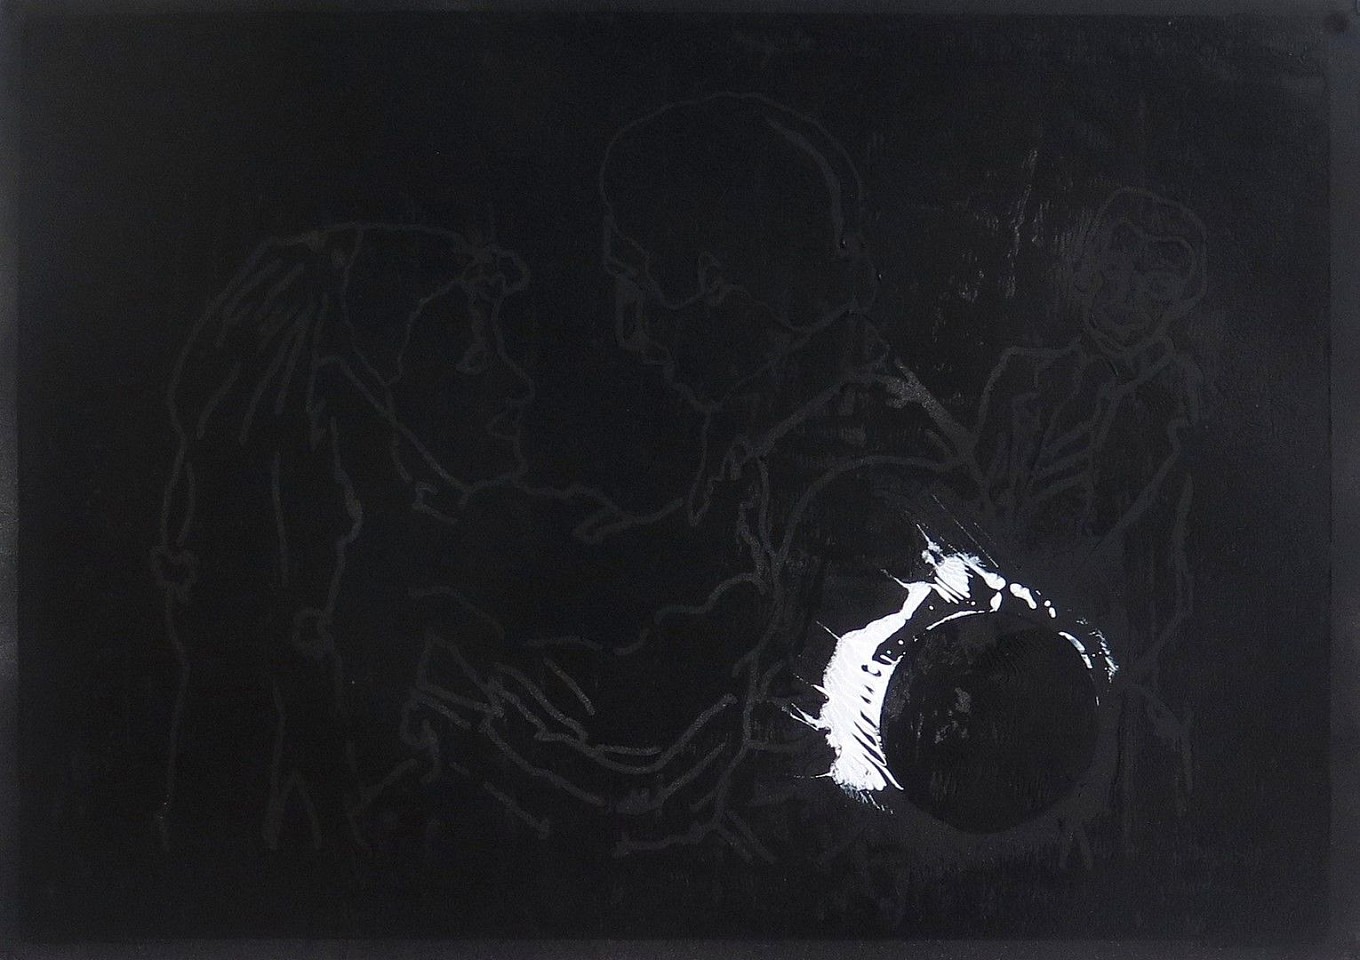 Elham Rokni, Paint Eclipse
2015, Monoprint, acrylic and spray paint on paper